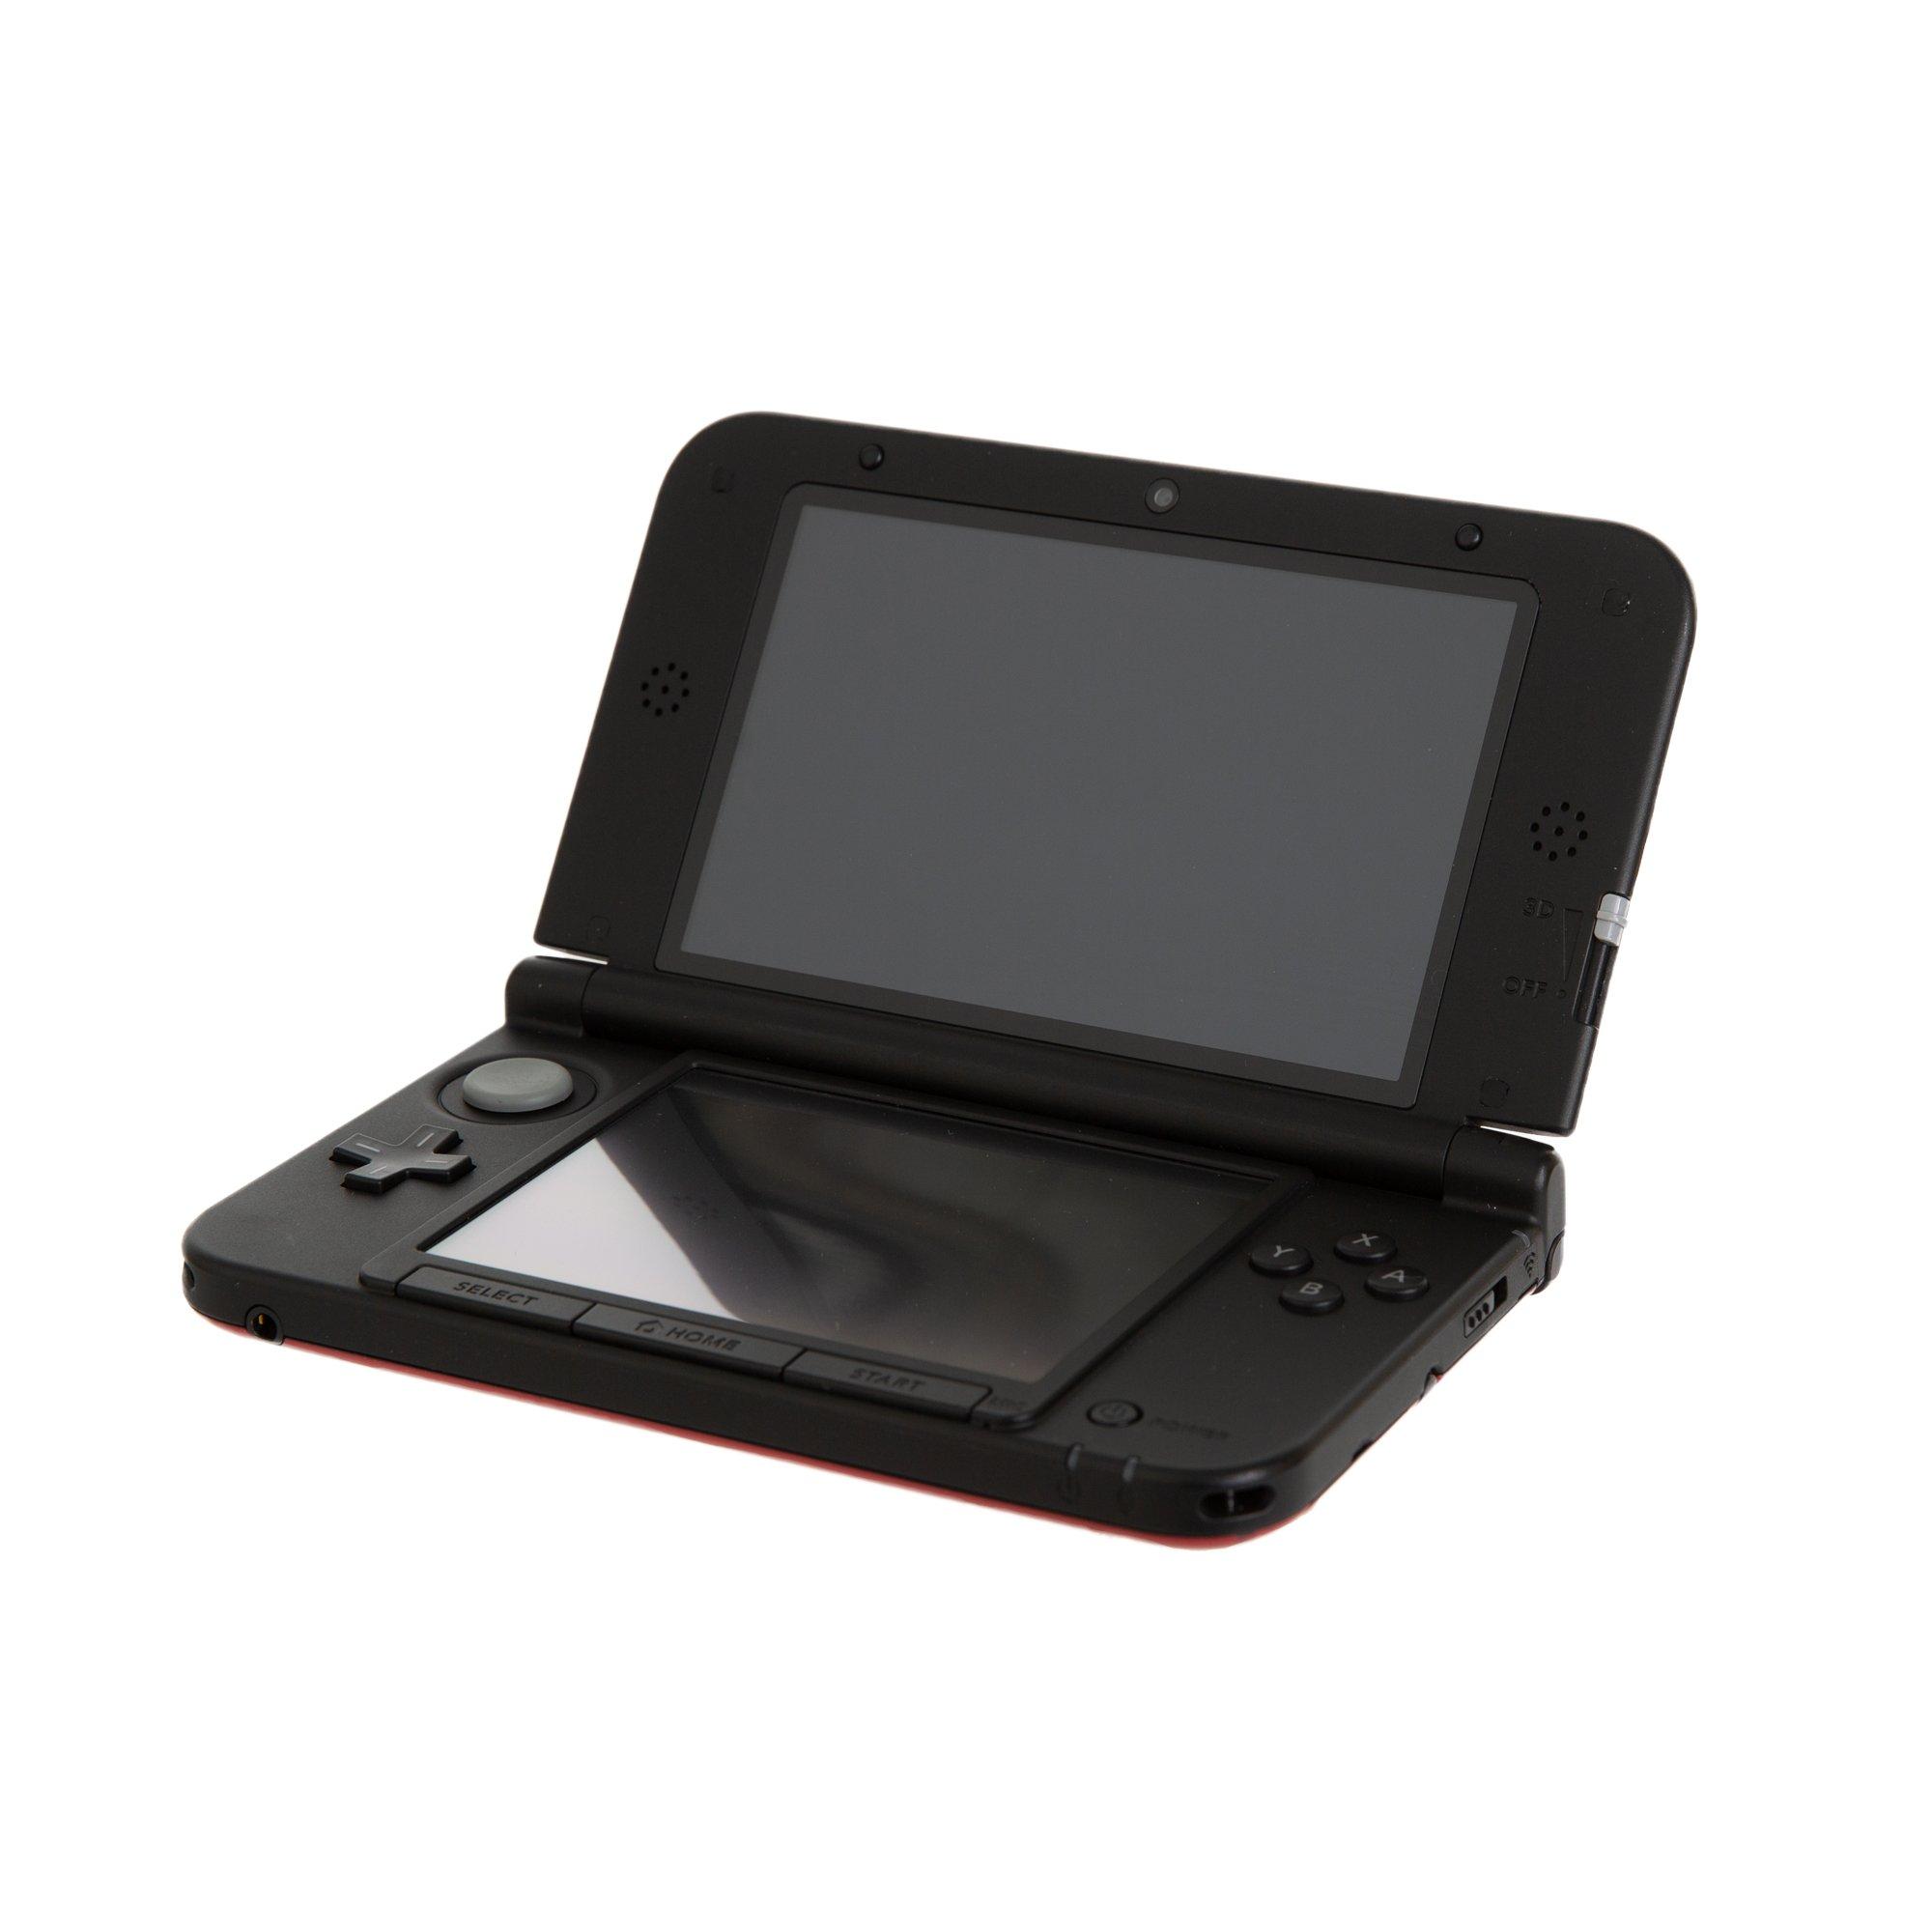 Nintendo 3DS XL Blue GameStop